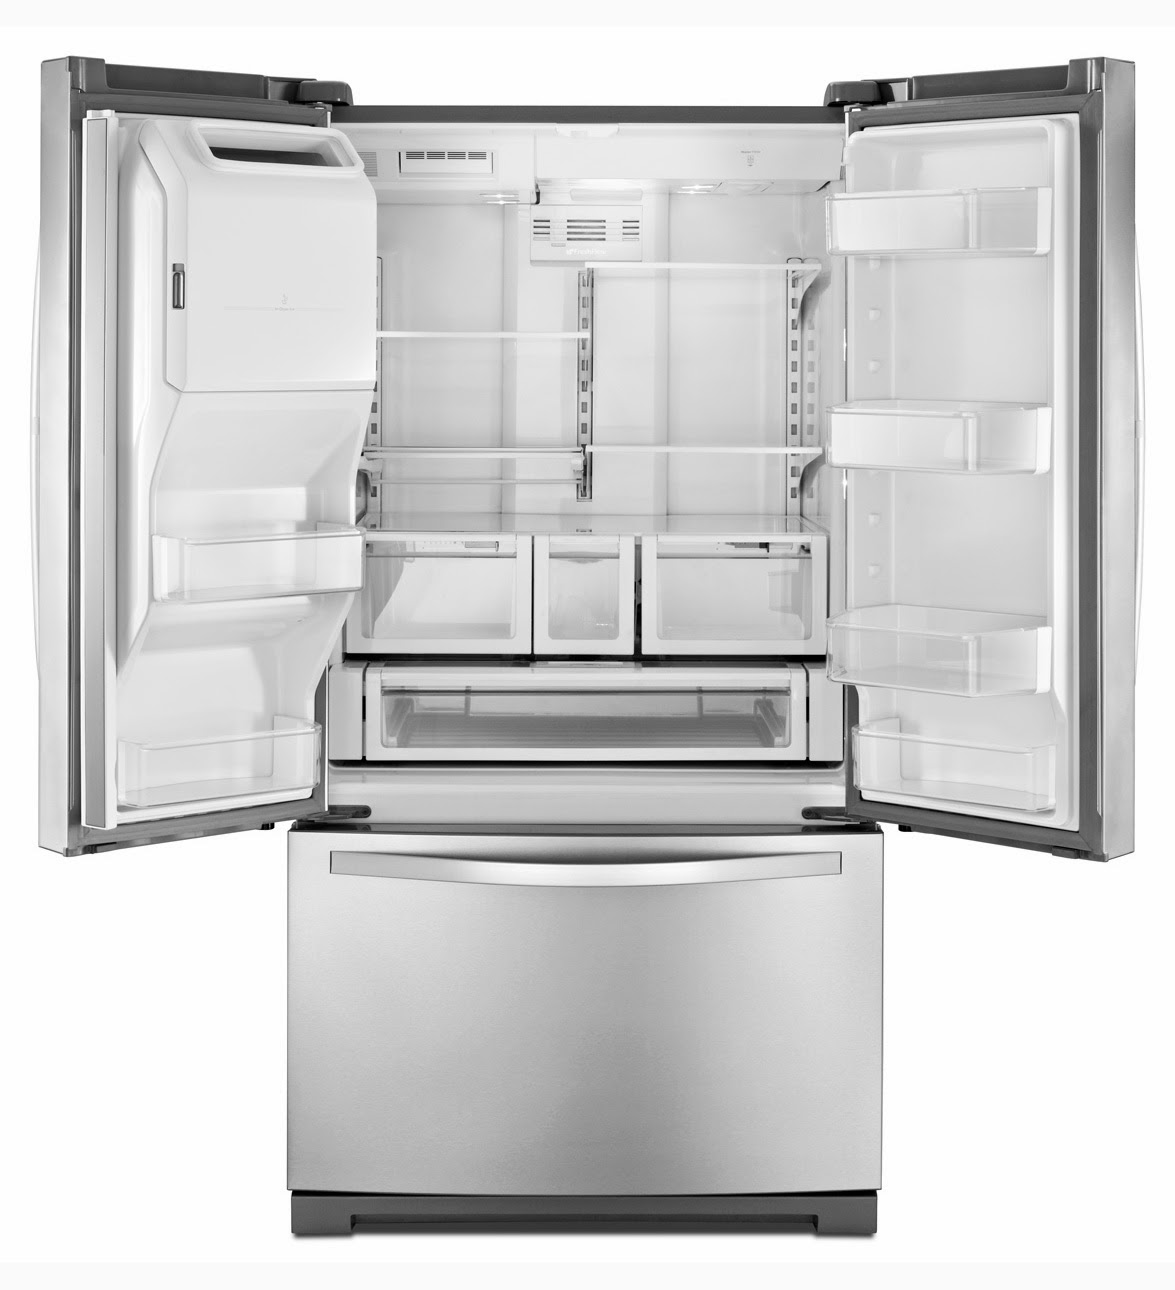 Whirlpool Refrigerator Brand: Stainless Steel WRF736SDAM Refrigerator